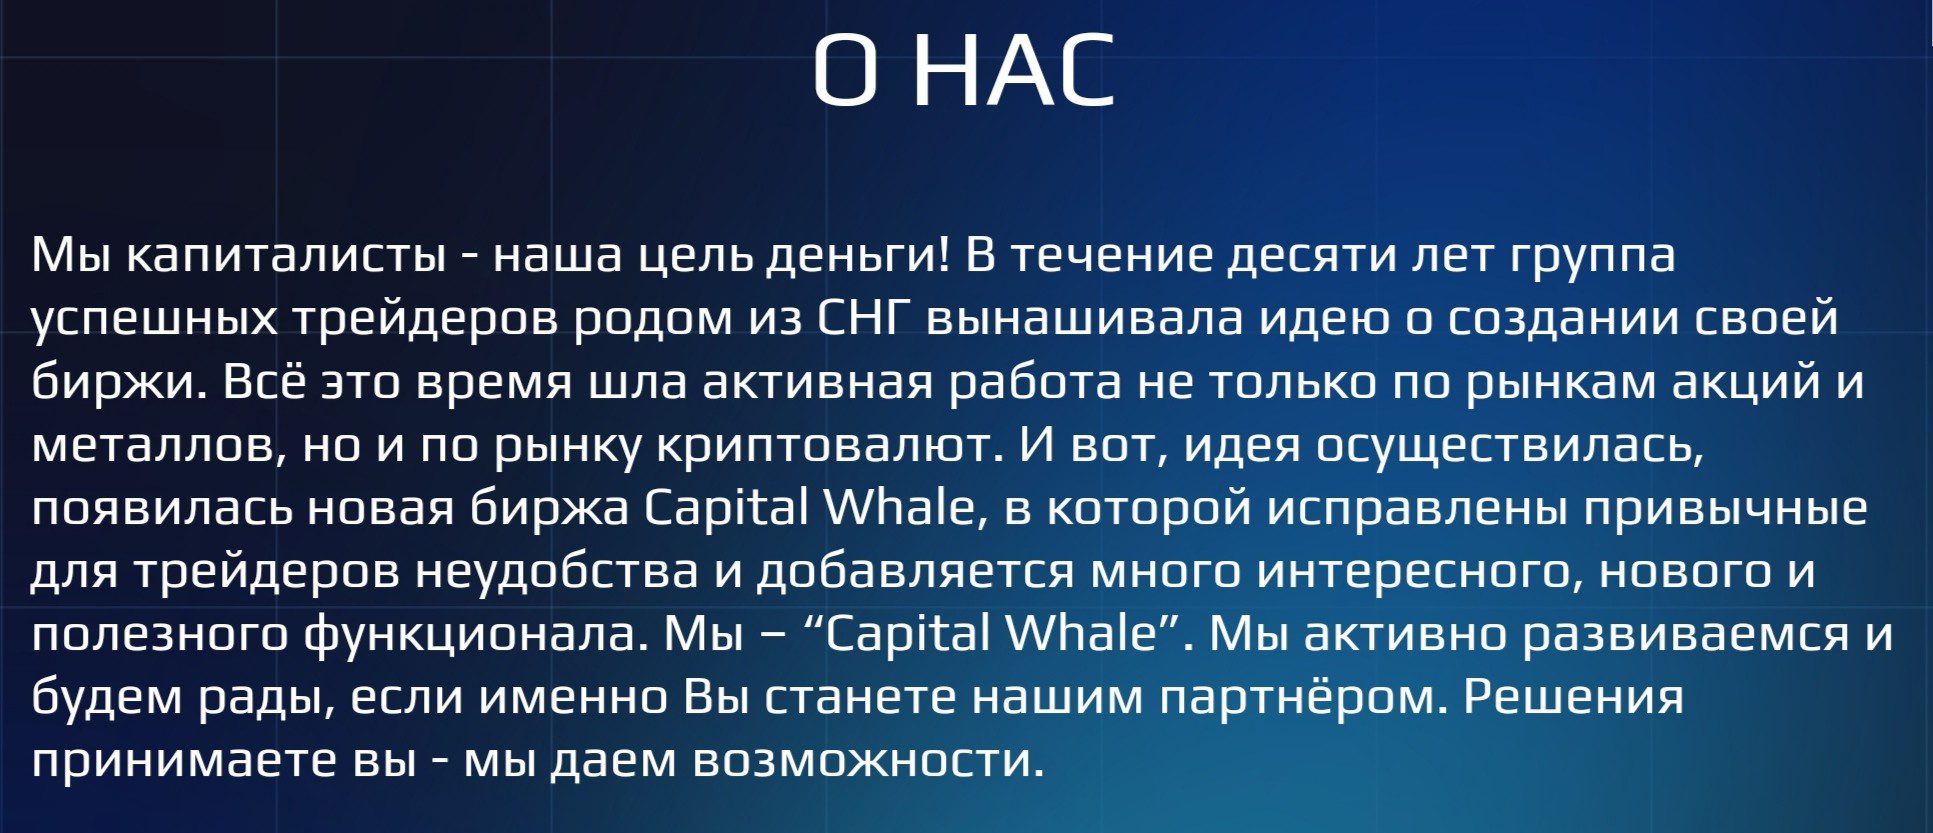 capital whale world